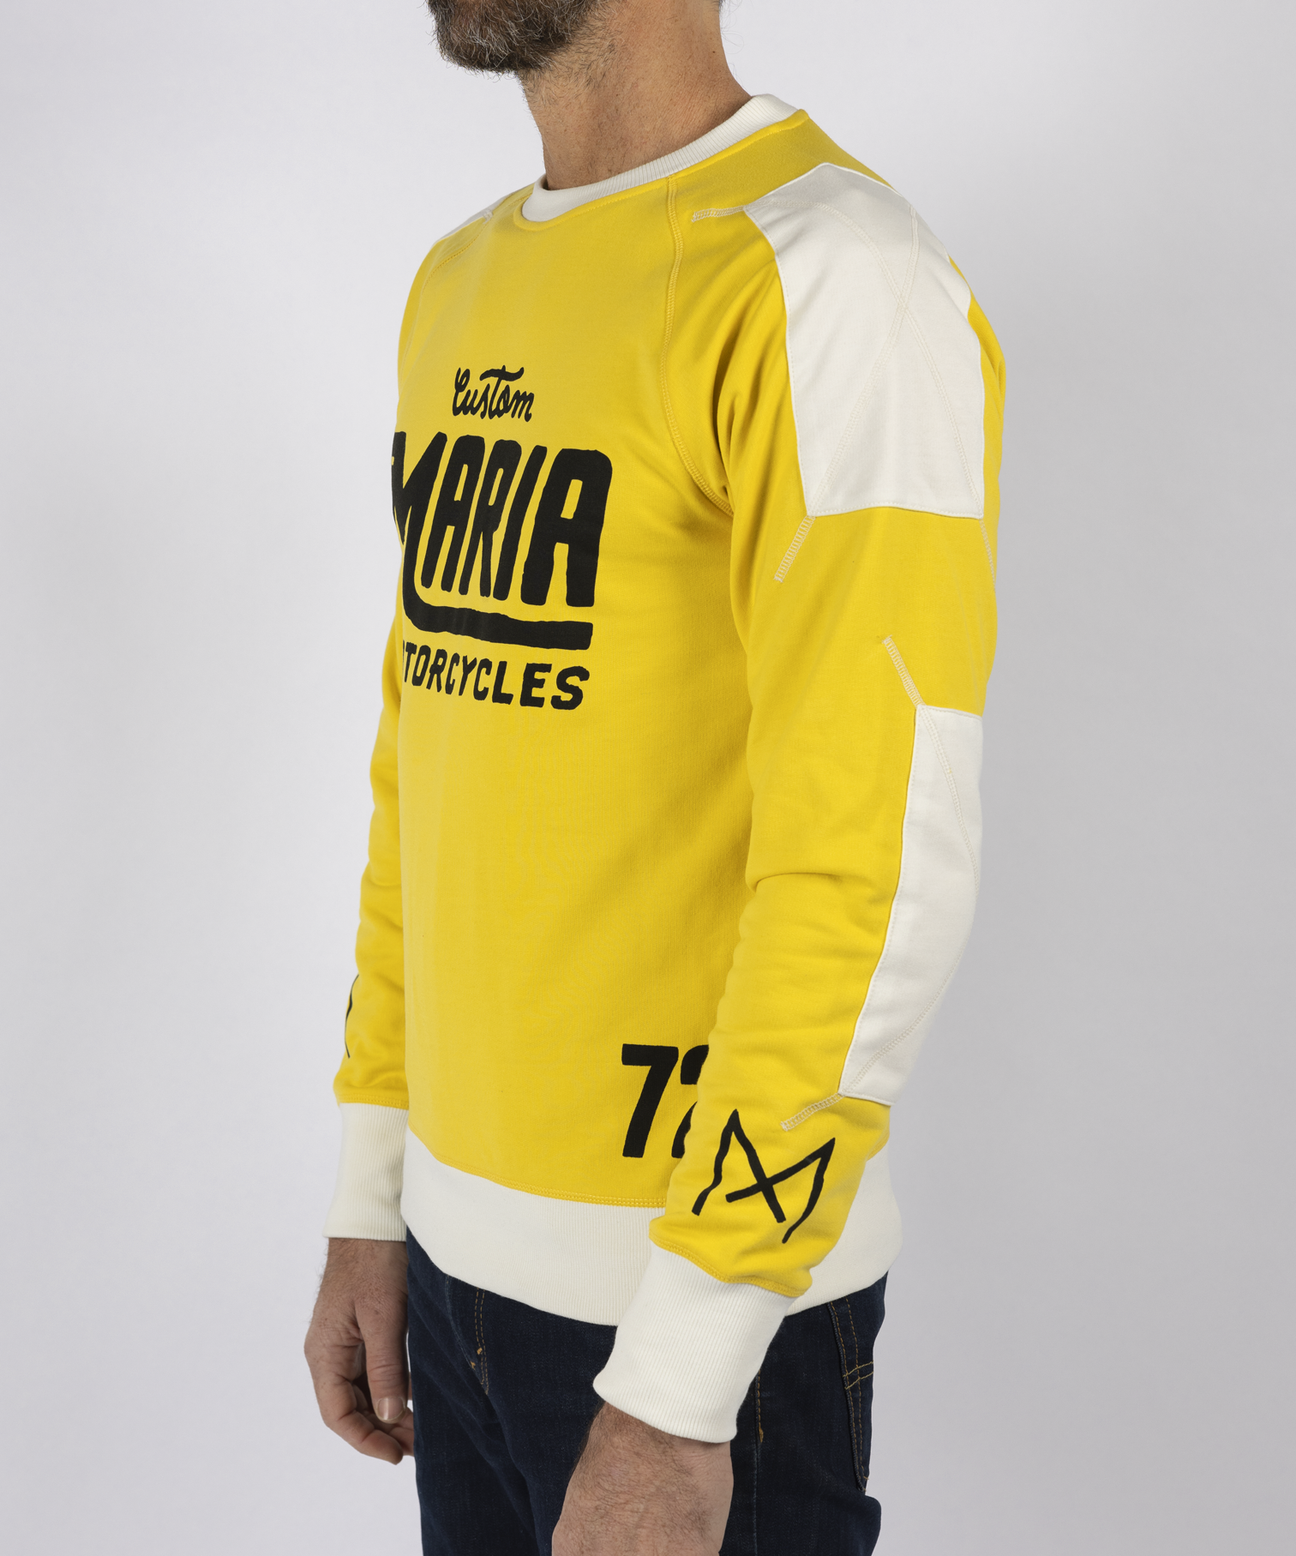 mens-yellow-Legion-sweatshirt-4.png